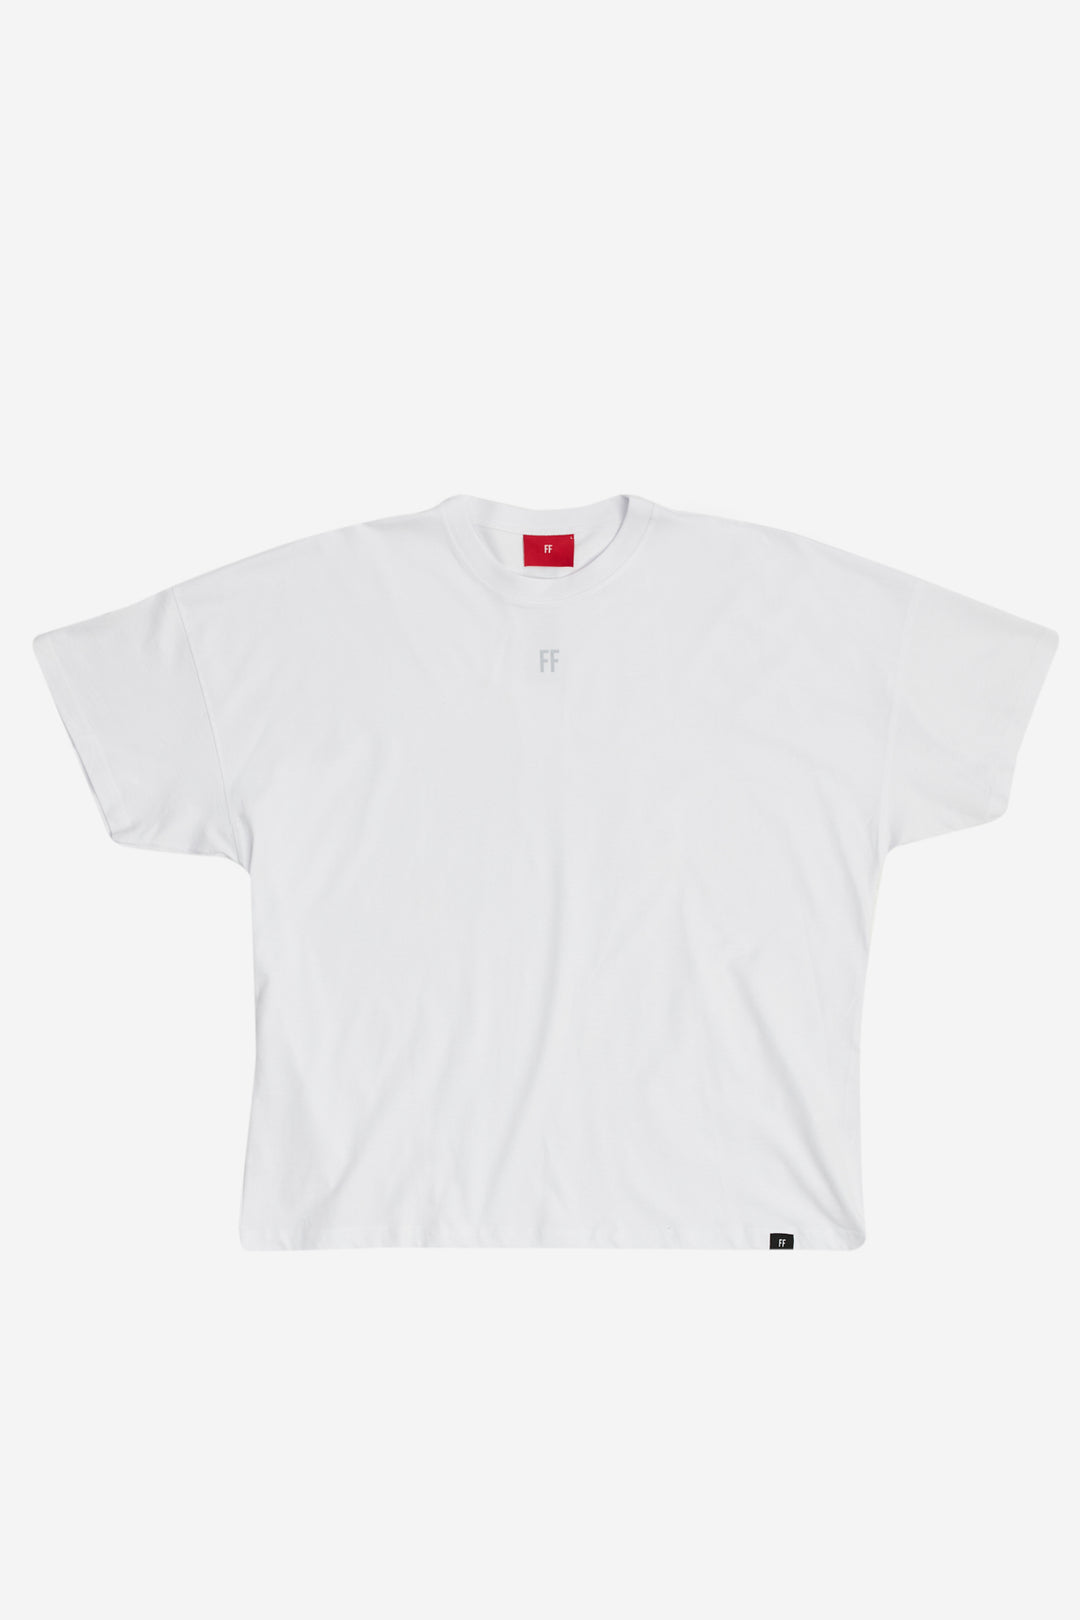 Reflective FF / Drop Shoulder Oversize T-shirt